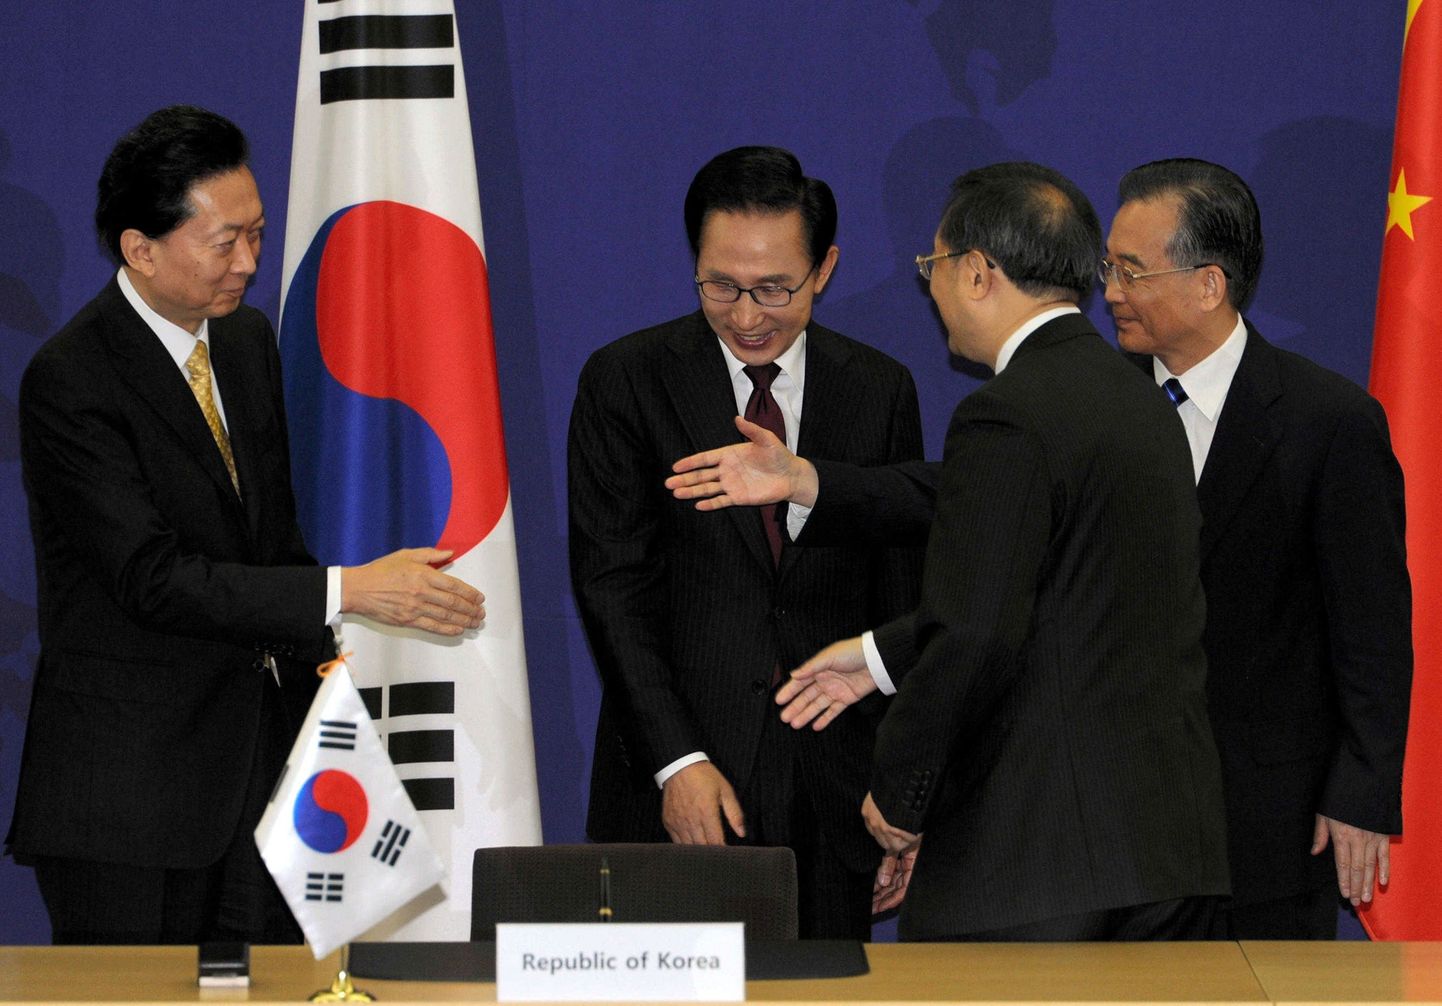 Hiina peaminister Wen Jiabao (paremal), Jaapani peaminister Yukio Hatoyama (vasakul), Lõuna-Korea president Lee Myung-Bak (keskel).